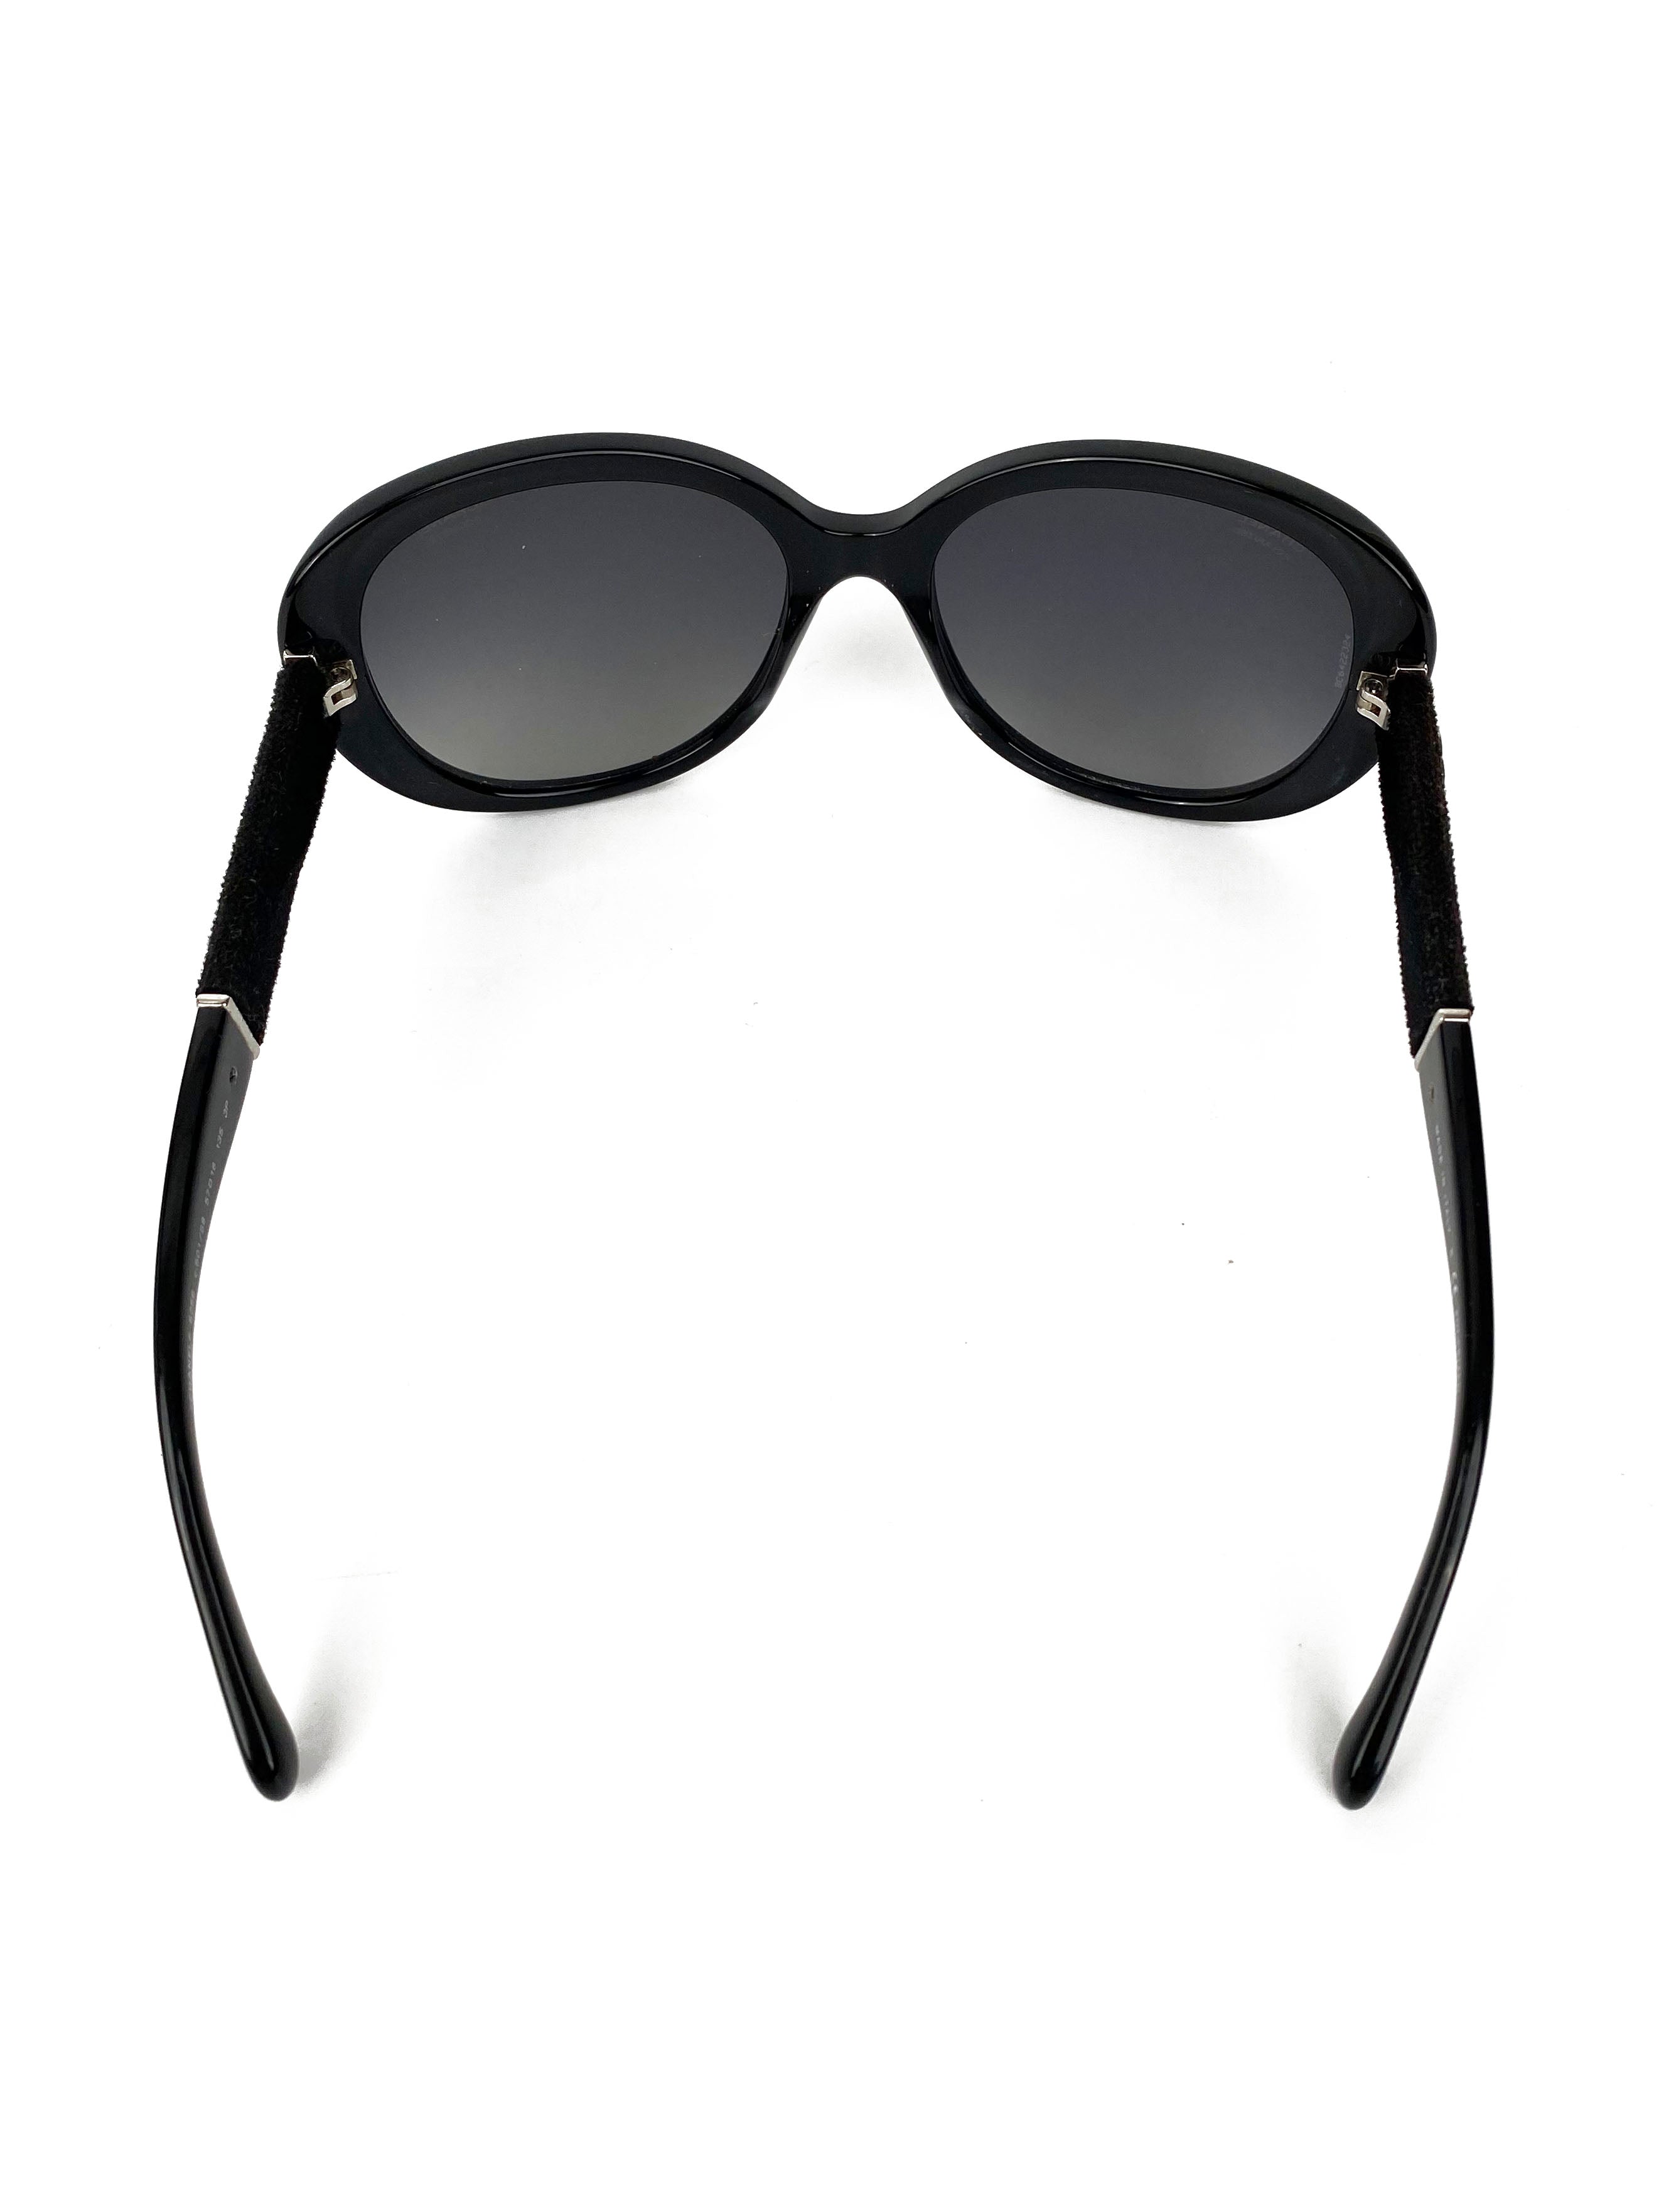 Chanel Black Polarised Sunglasses 5256